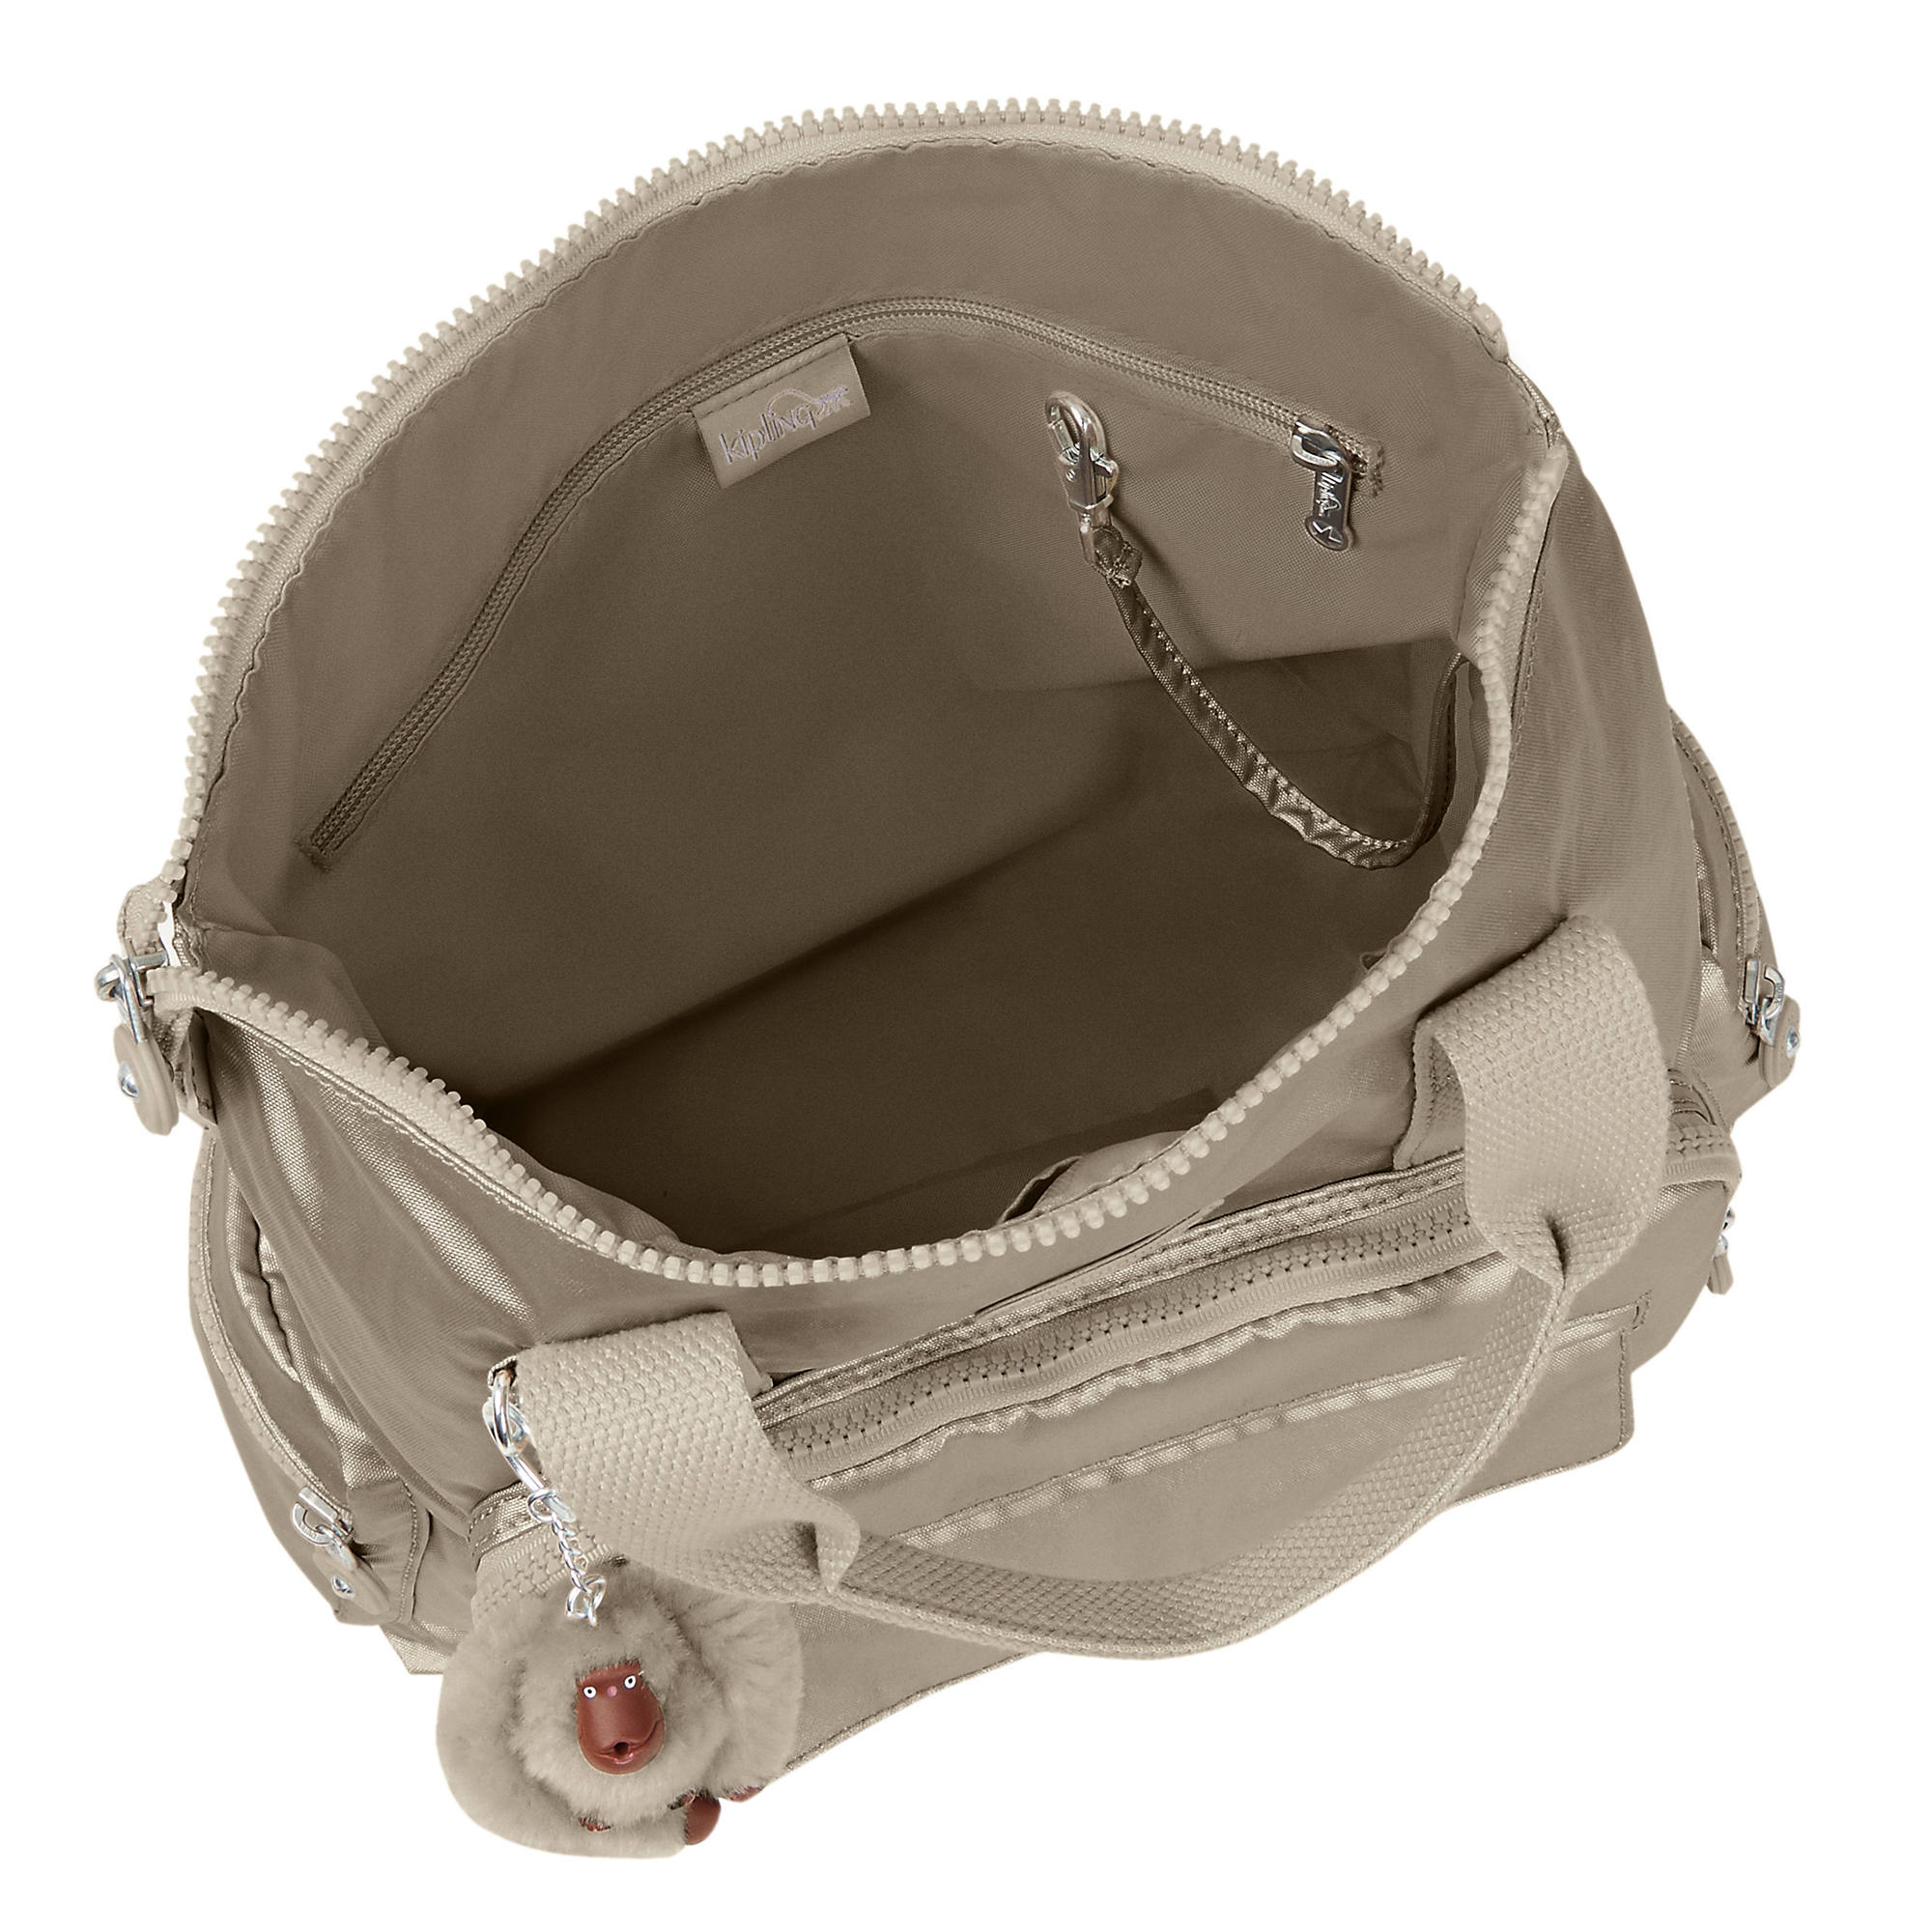 Kipling Alvy 2-In-1 Convertible Metallic Tote Bag Backpack | eBay